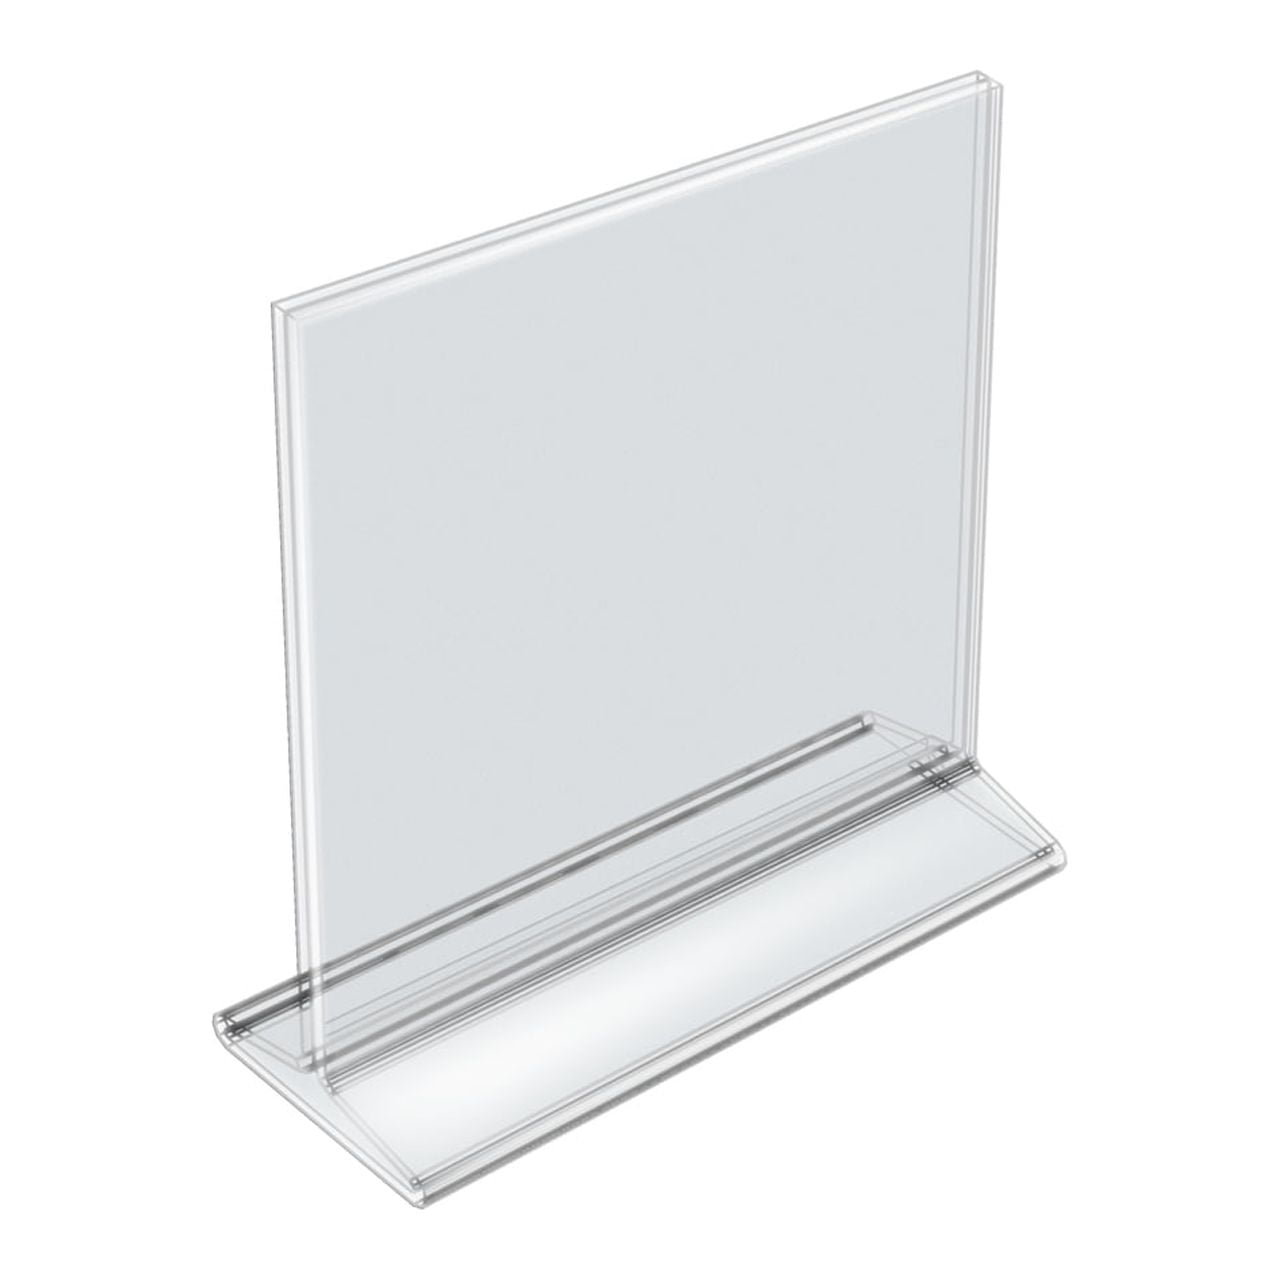 Azar Displays 142707 Top Loading Clear Acrylic T-Frame Sign Holder 7